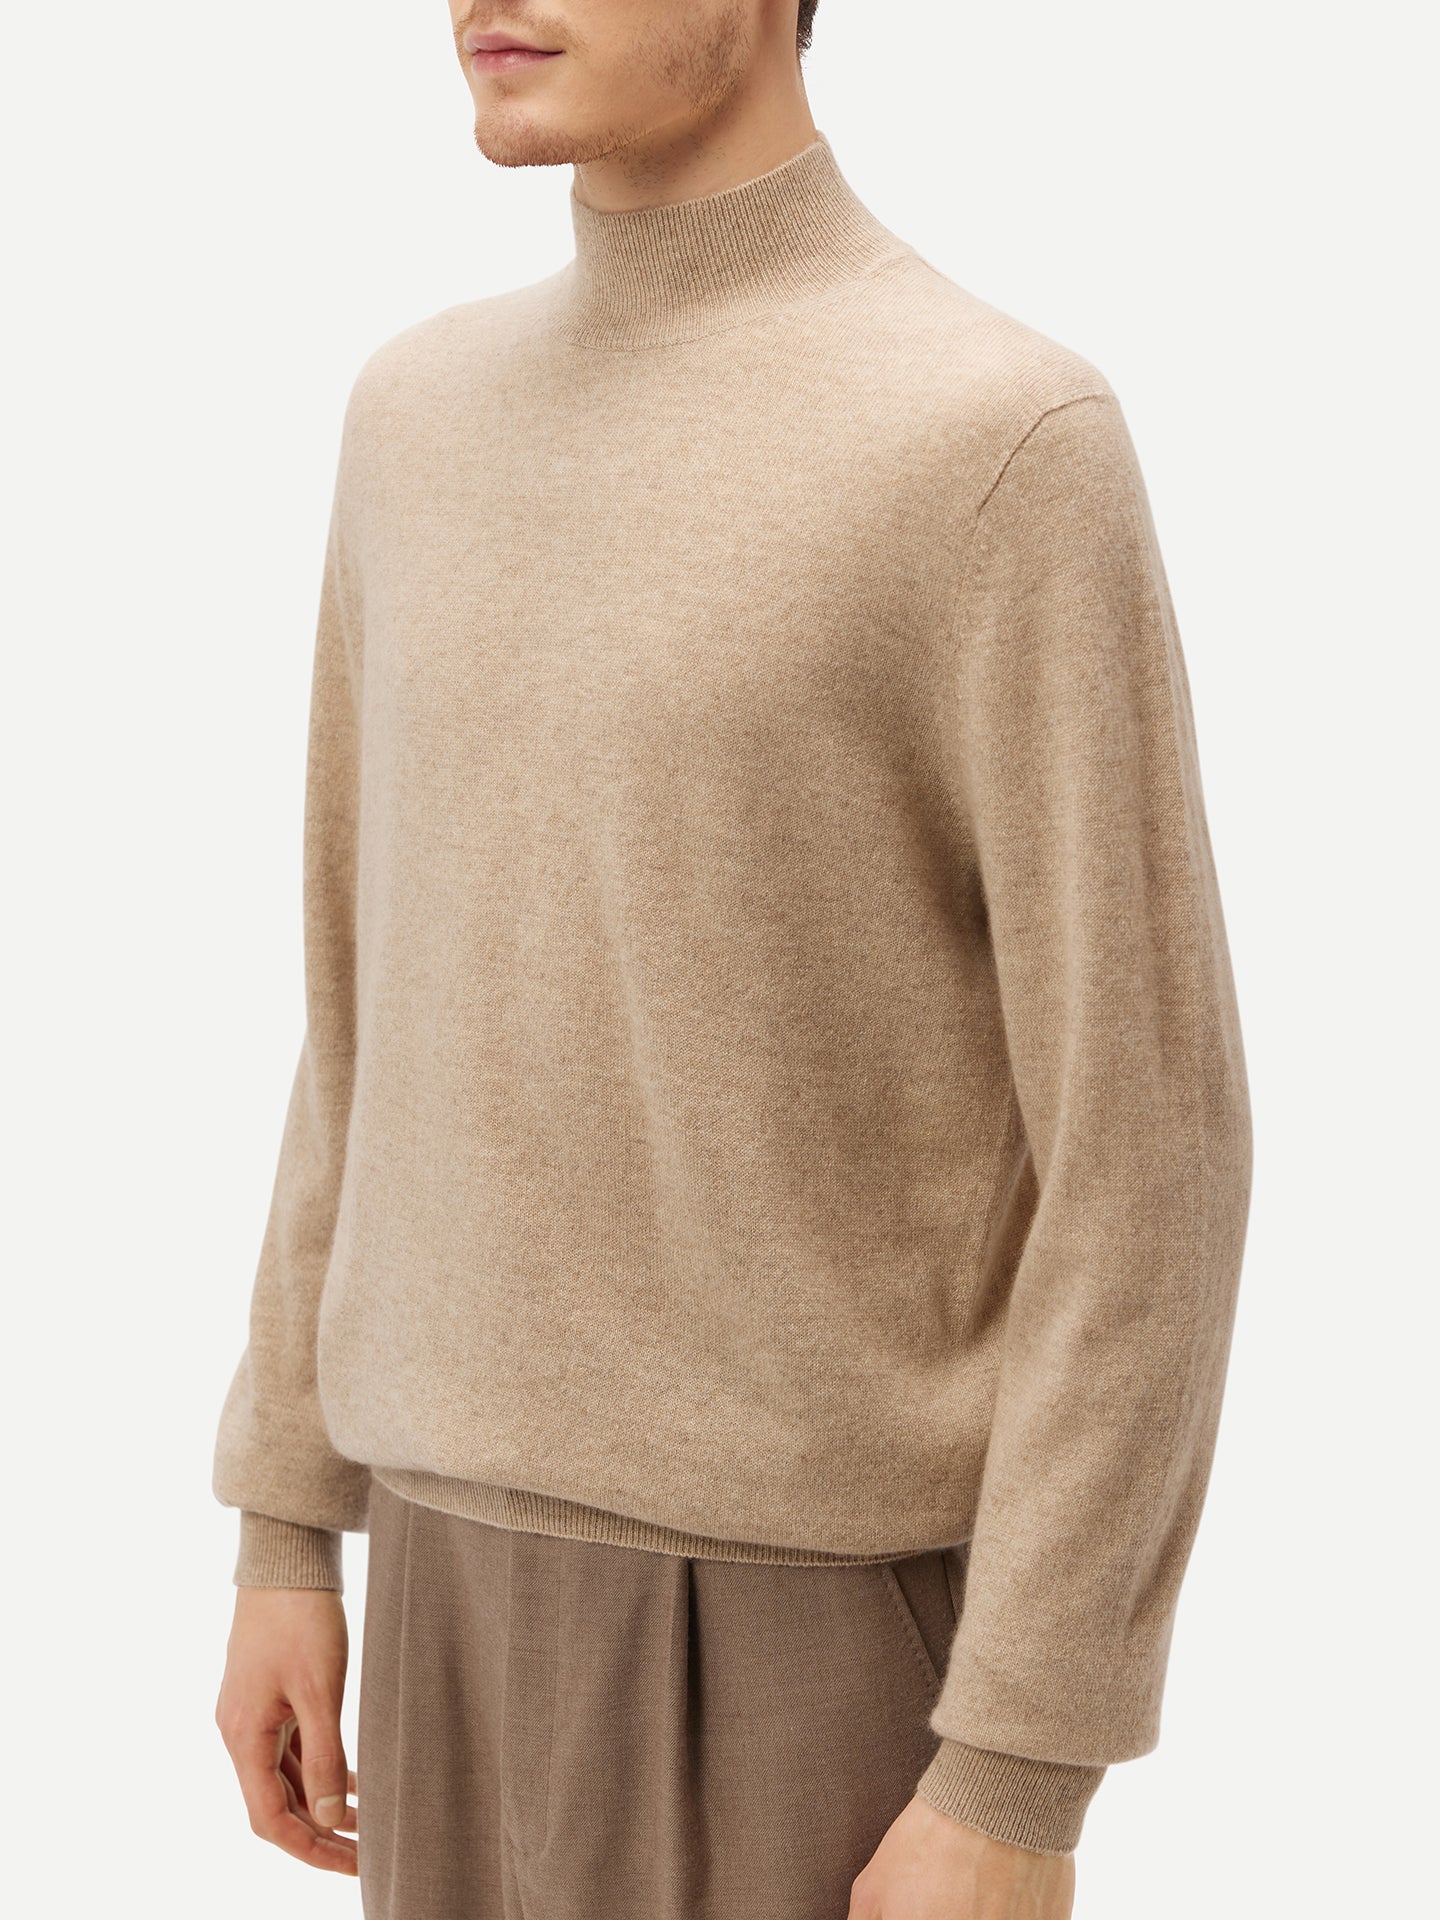 Men's Cashmere Mock Neck Sweater Warm Grey - Gobi Cashmere